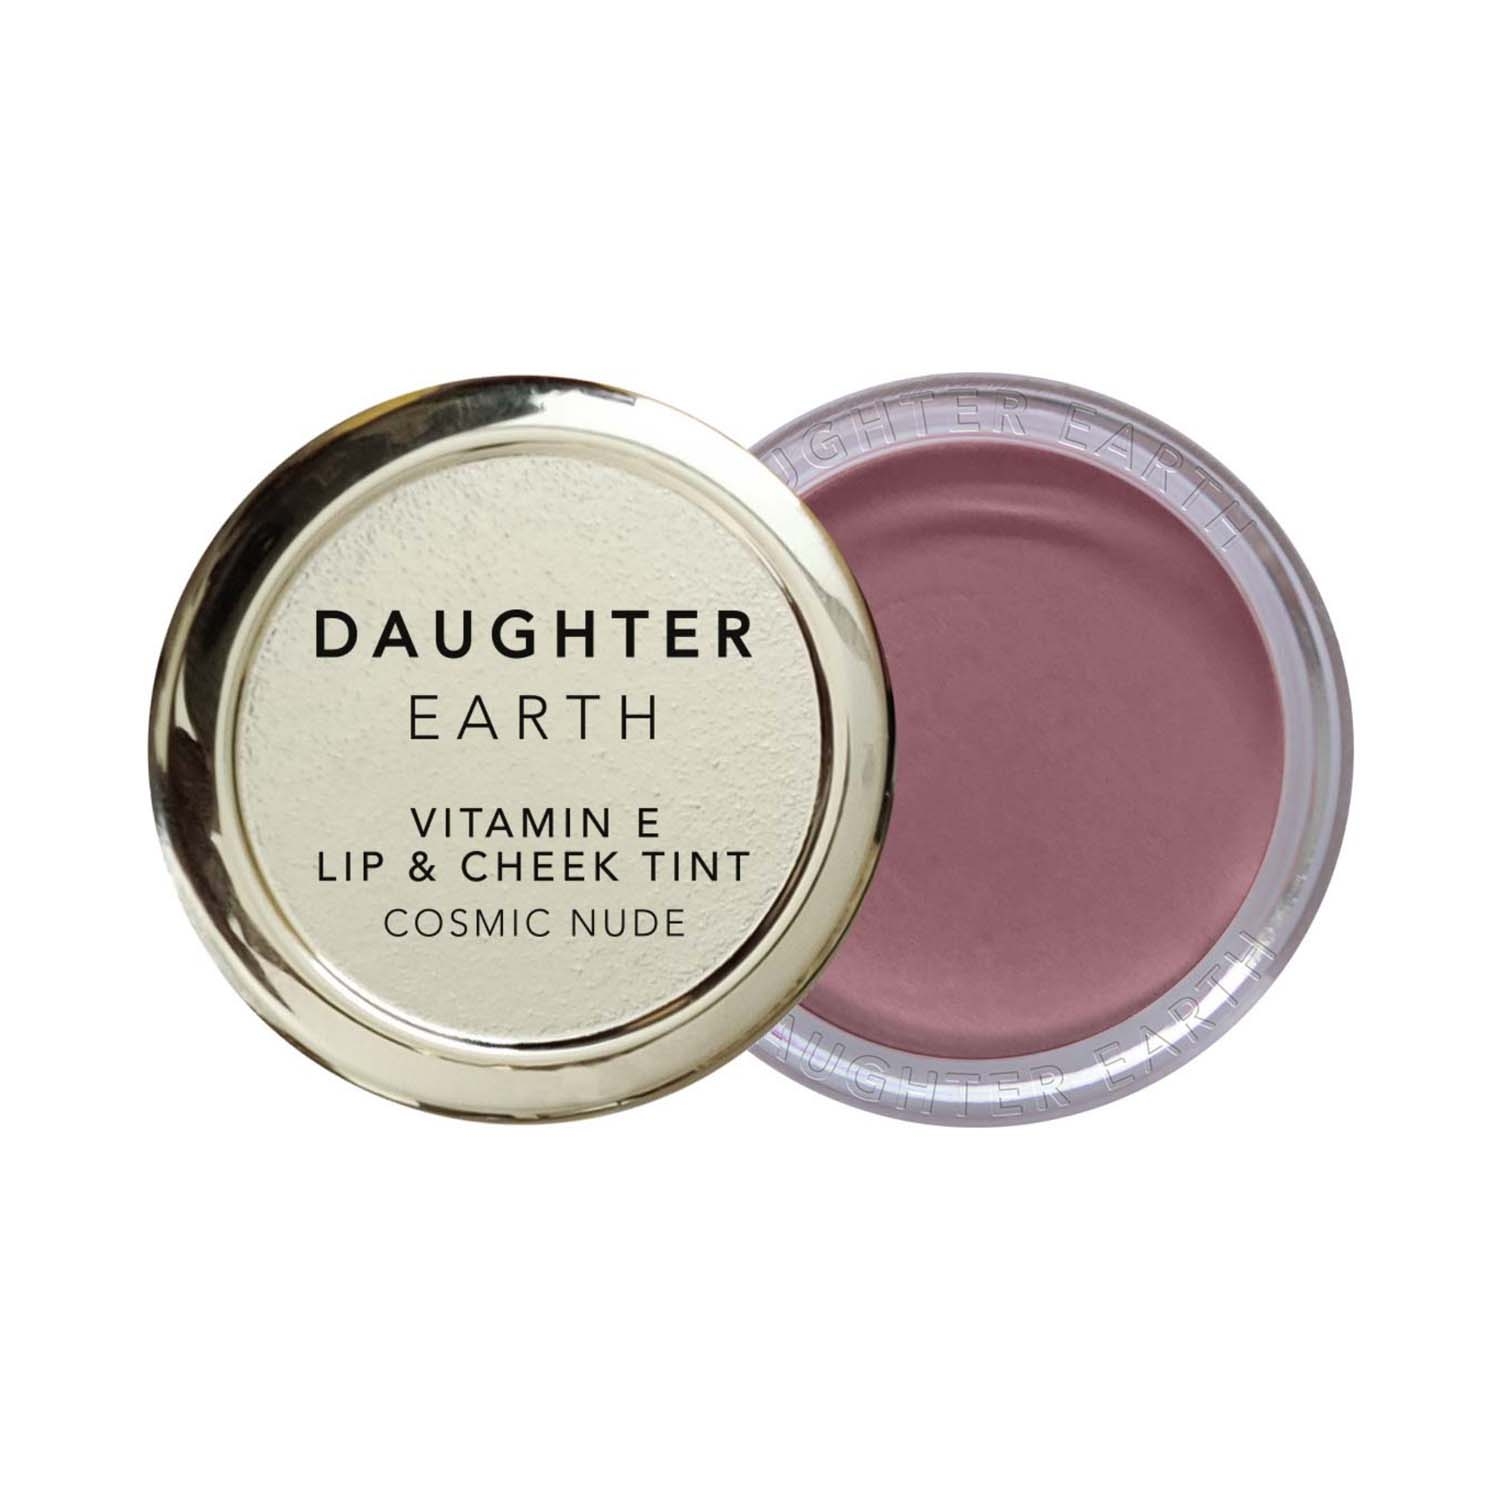  | DAUGHTER EARTH Vitamin E Lip & Cheek Tint - Cosmic Nude (4.5g)